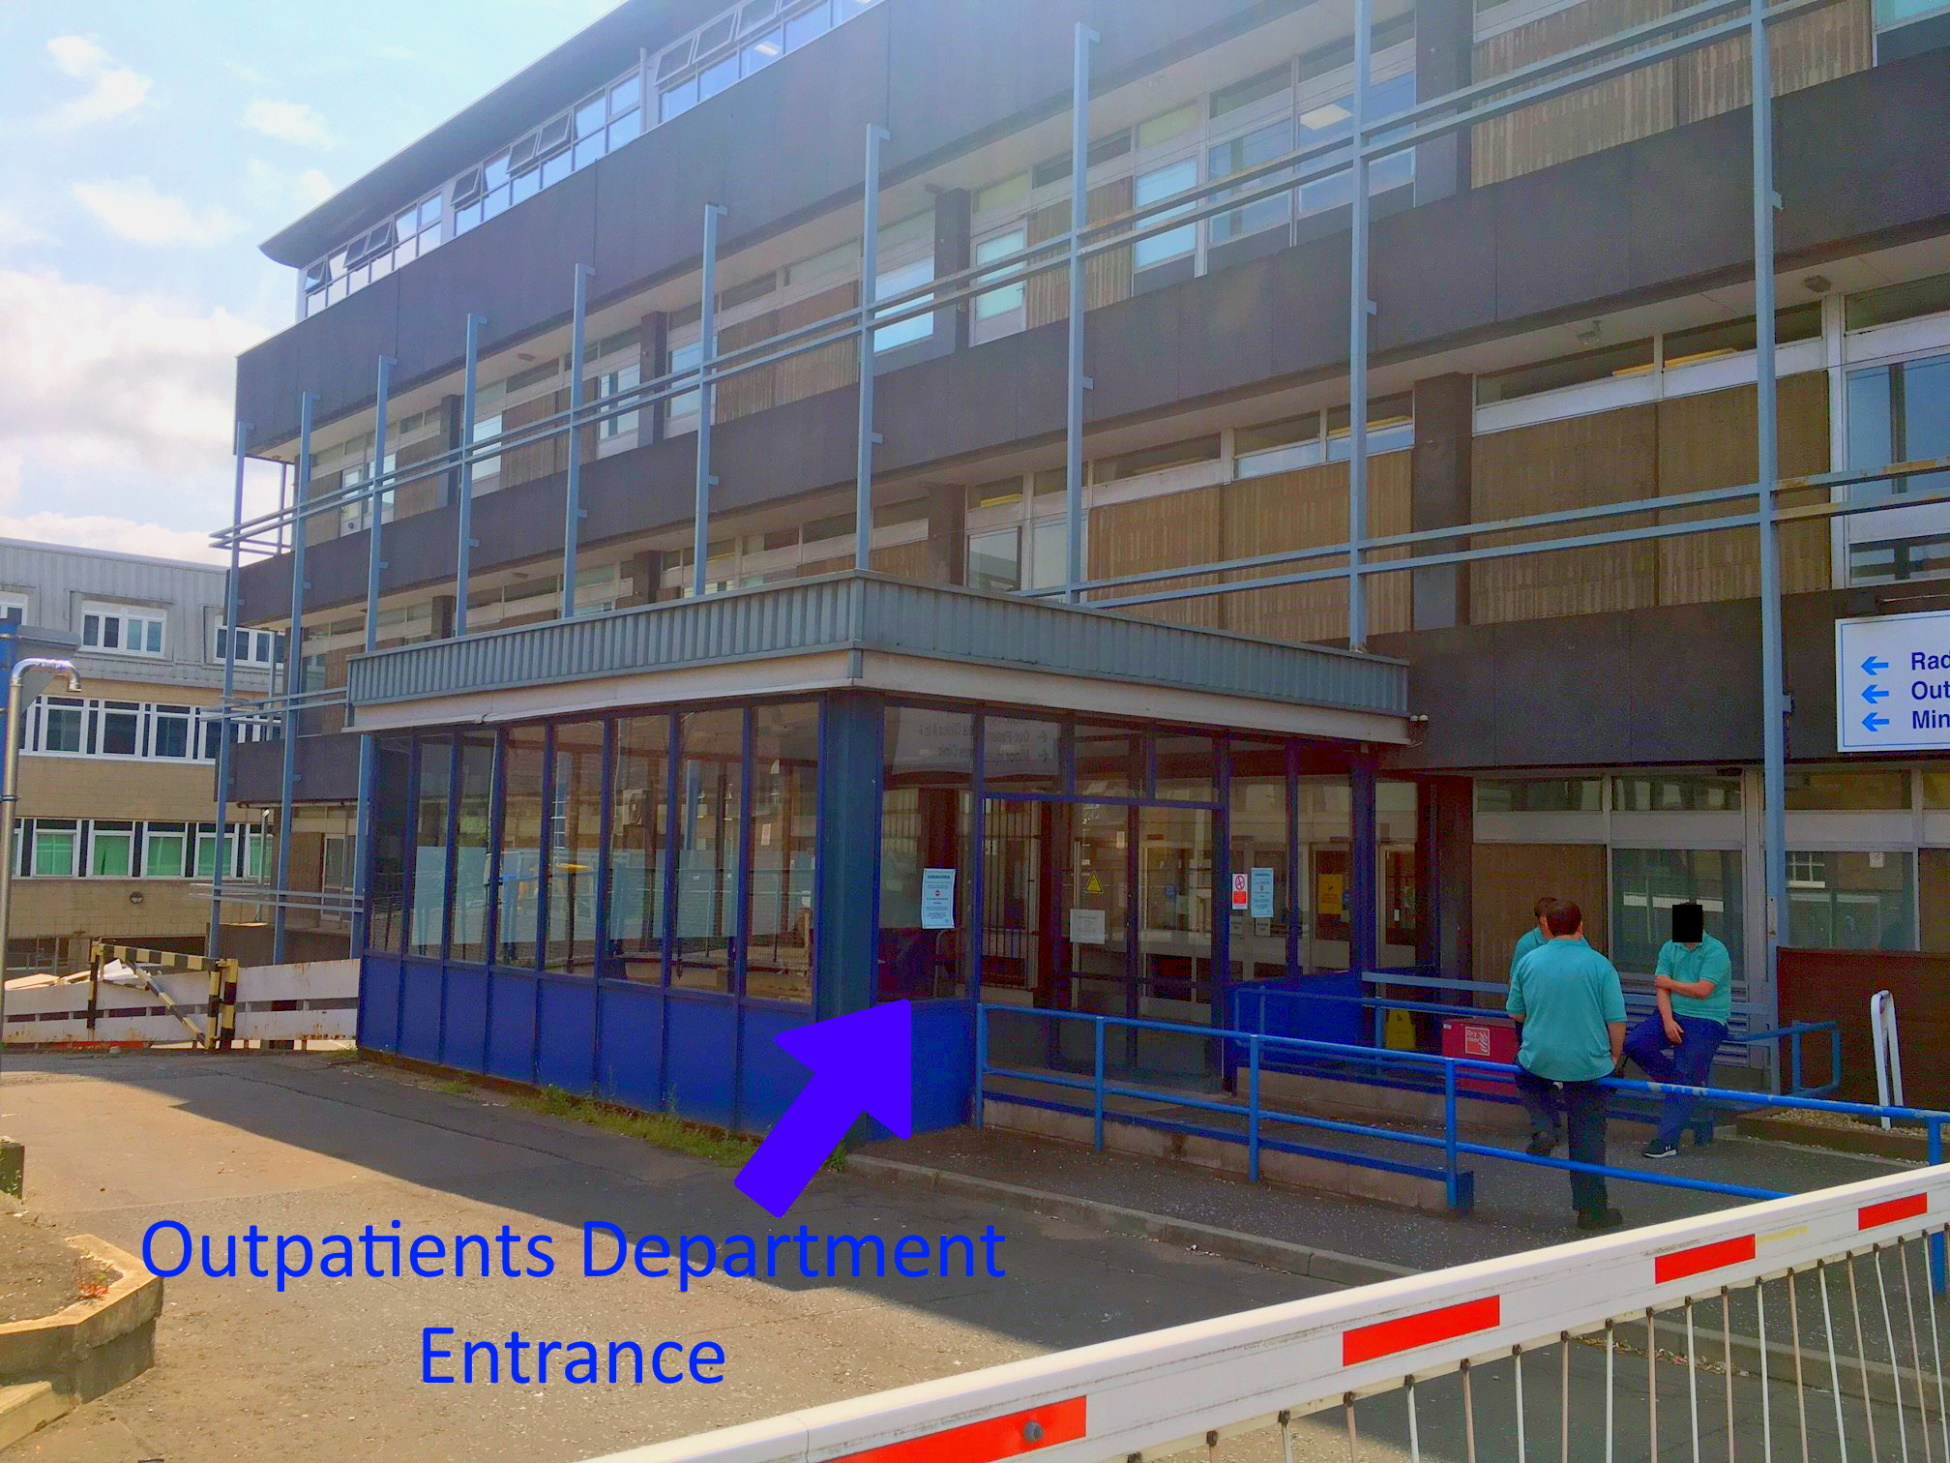 Western General Hospital Outpatients Department Entrance